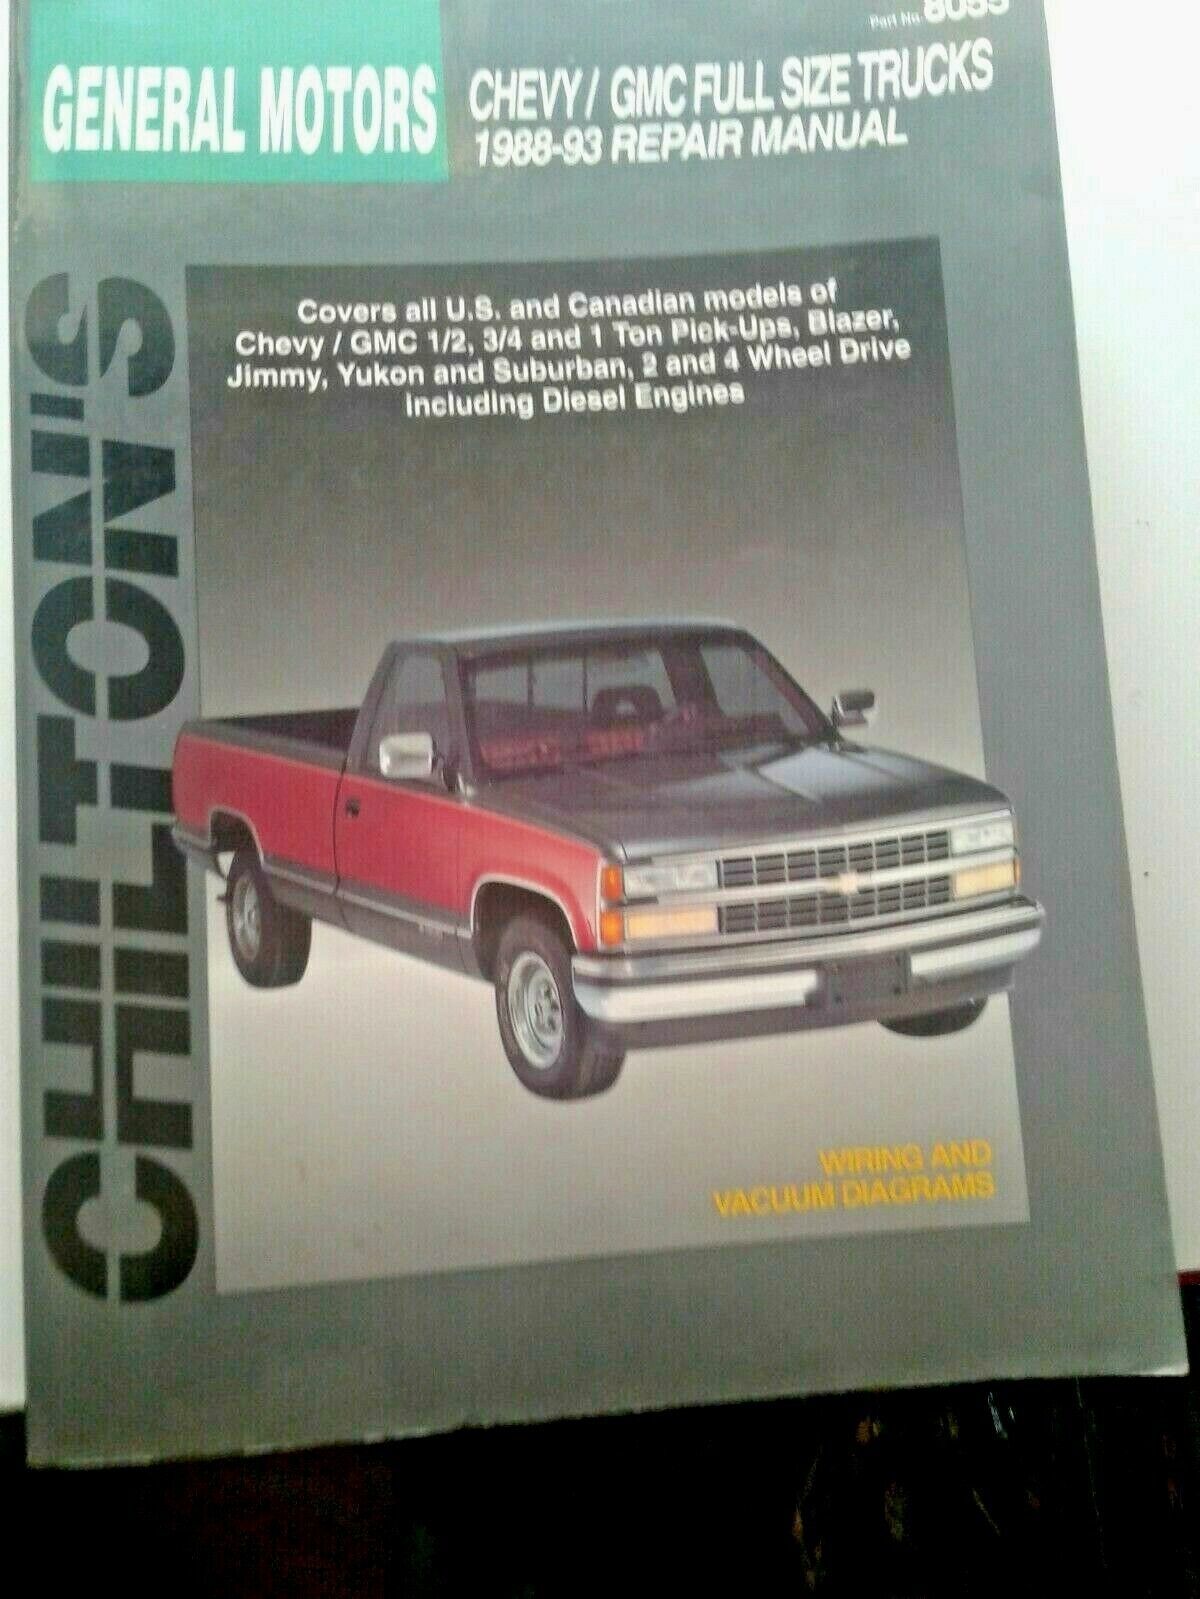 1988 - 93  Chilton's General ,Motors Chevy GMC Full Size Truck Repair Manual - $30.00